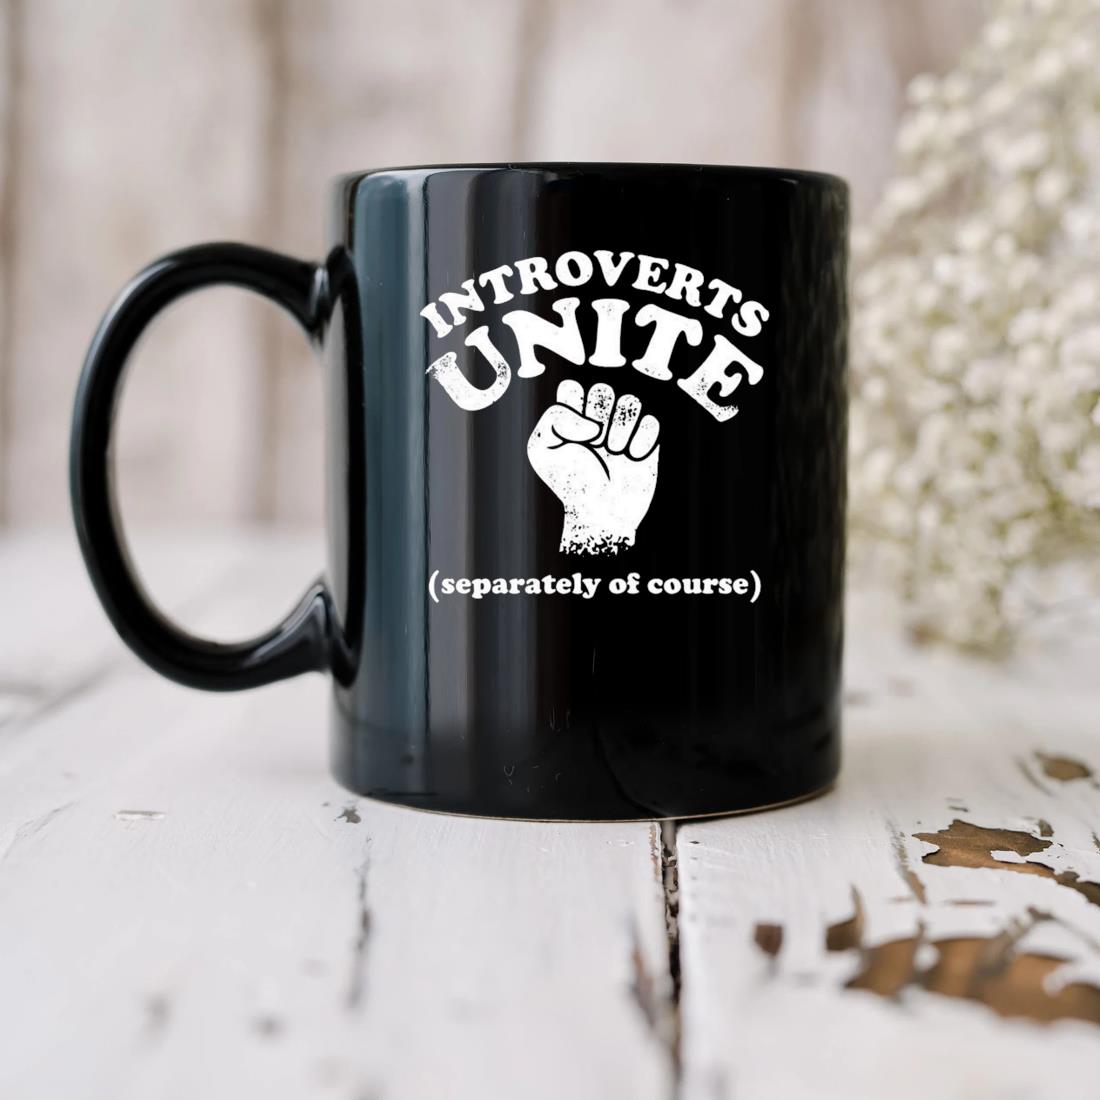 Introverts Unite Separately Of Course Mug